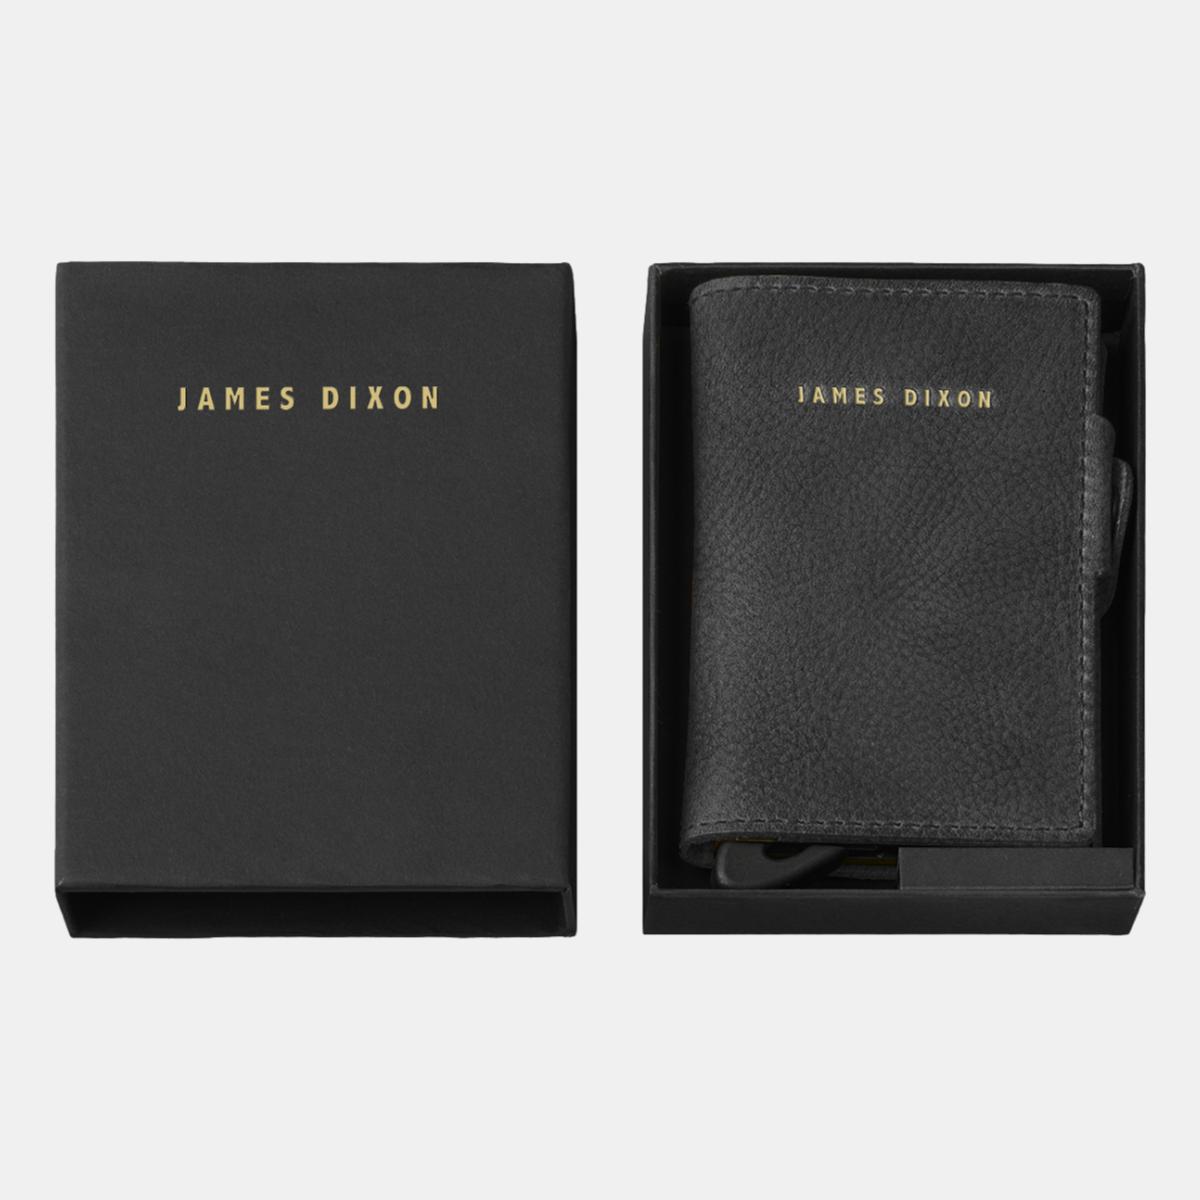 jd0210 james dixon boton grace black gold coin pocket wallet box